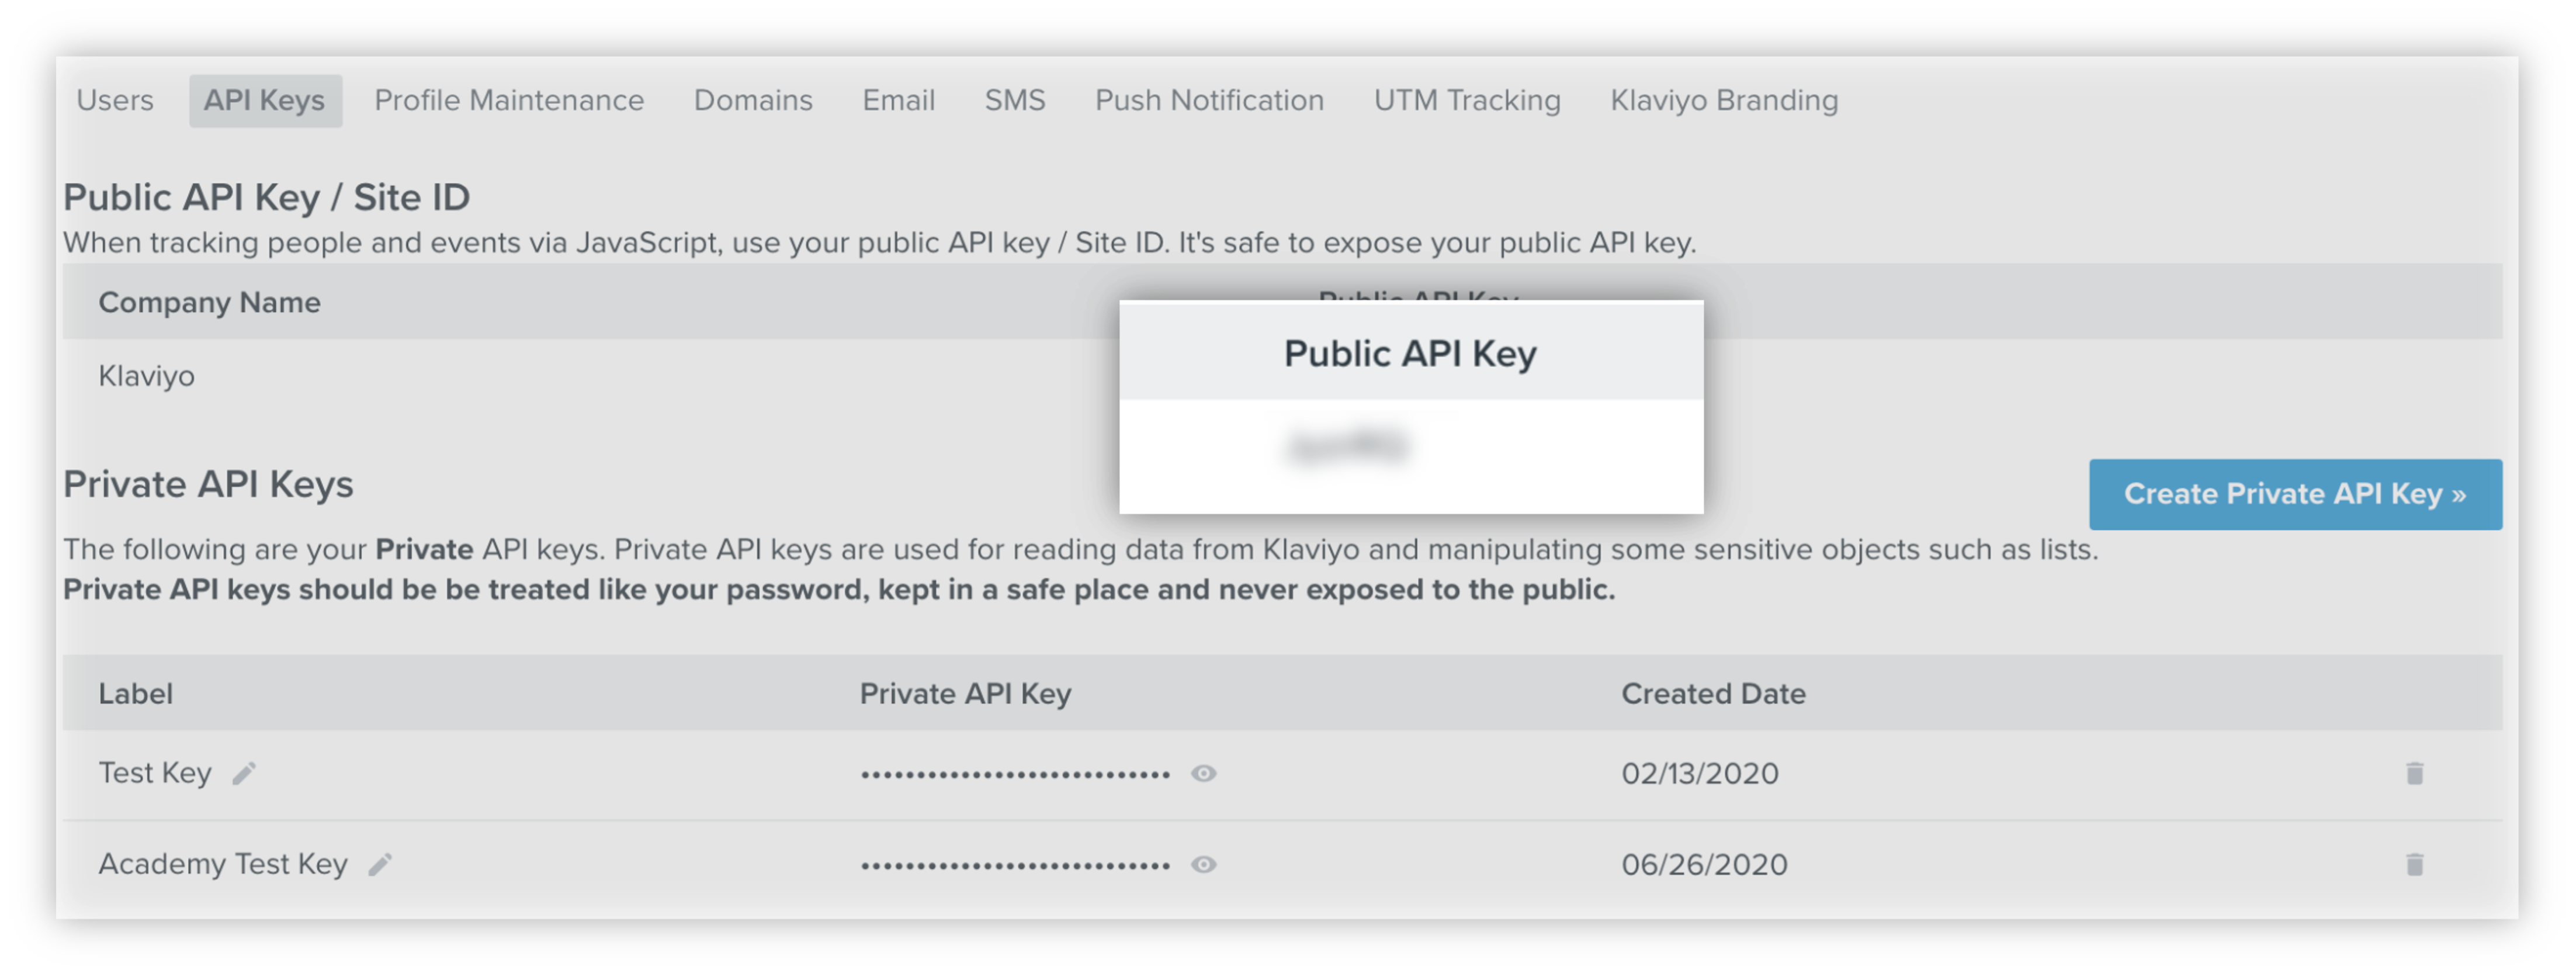 Public_API_Key_Page_Location.png